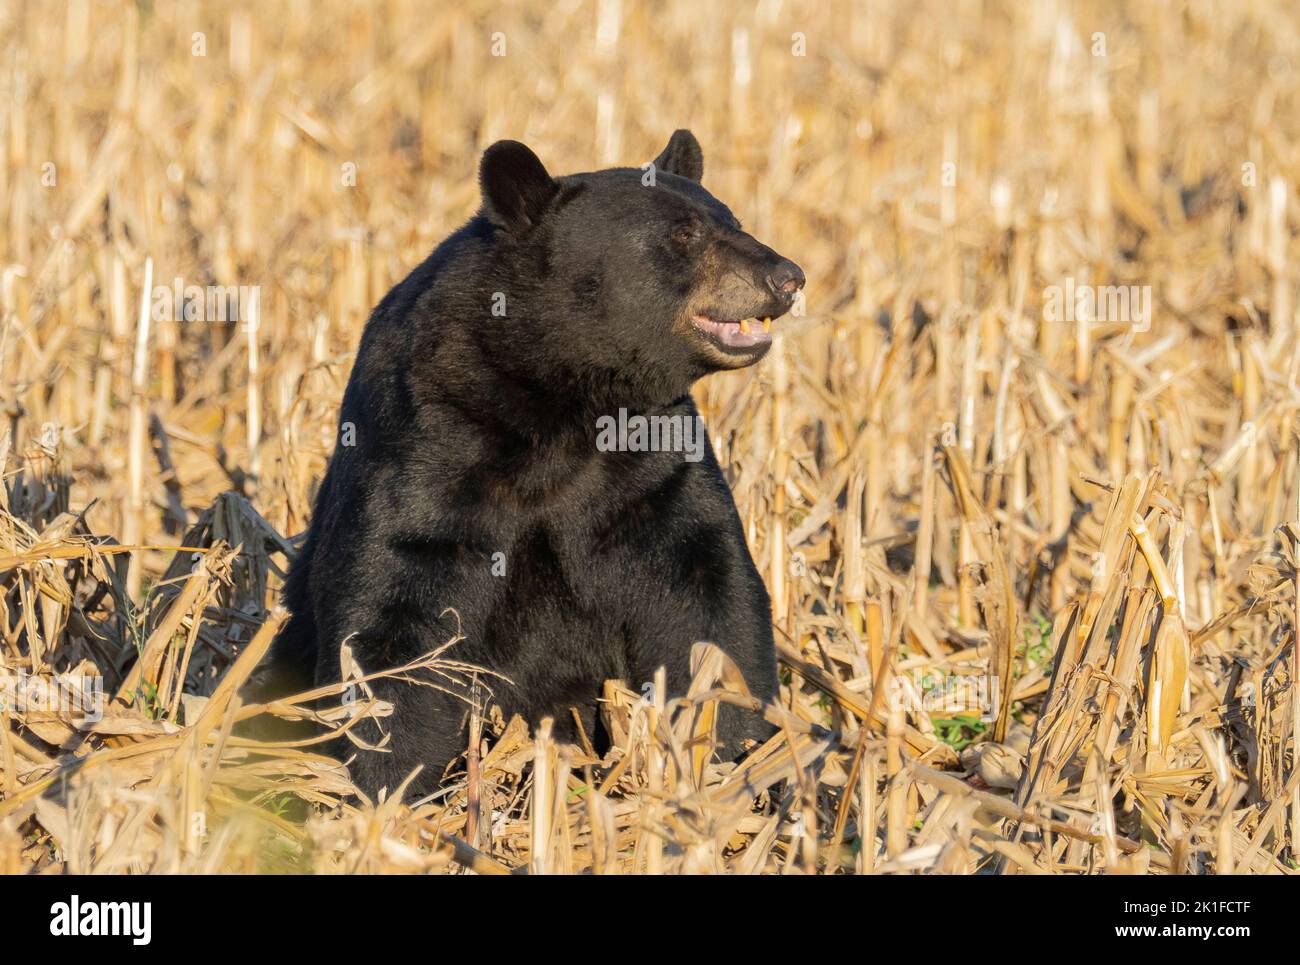 American Black Bear (Ursus americanus)  sitting in a cornfield Stock Photo